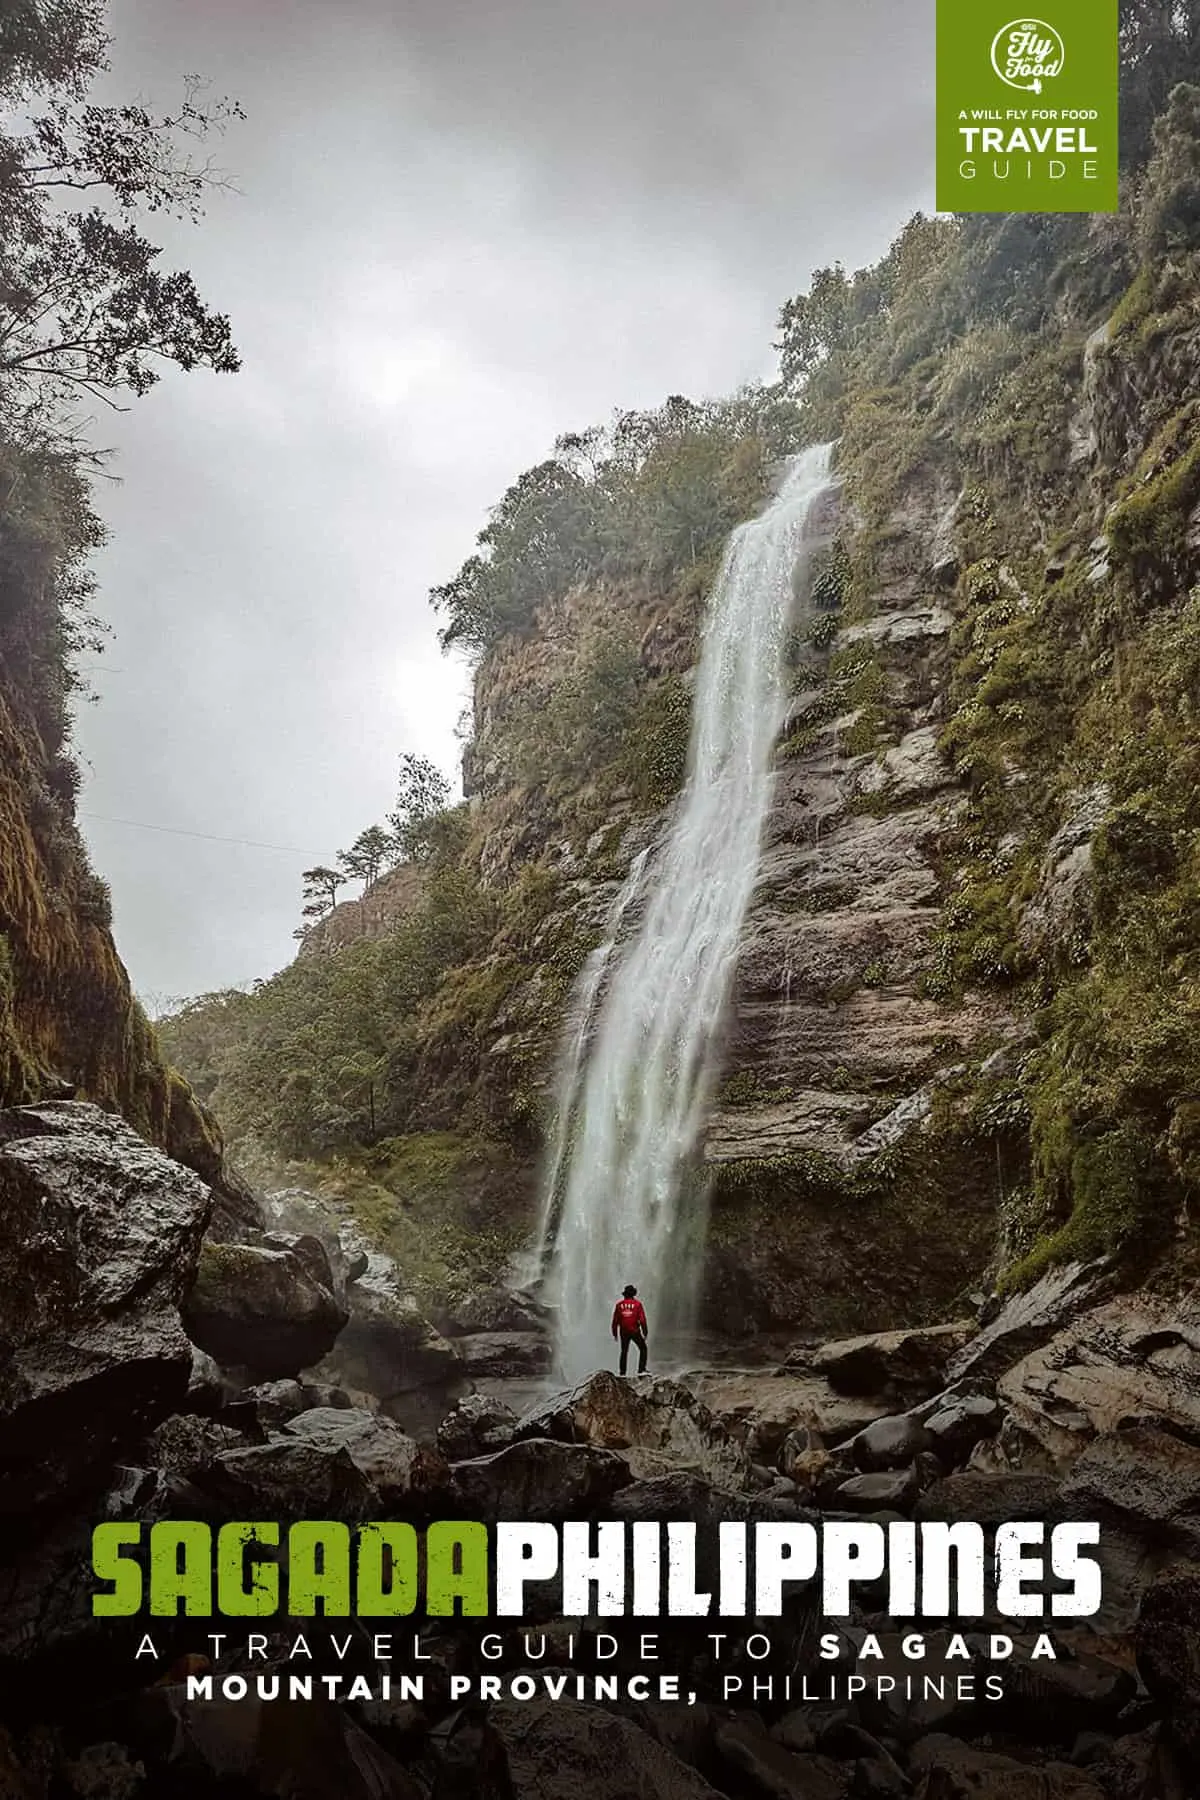 Bomod-ok Falls, Sagada, Mountain Province, Philippines